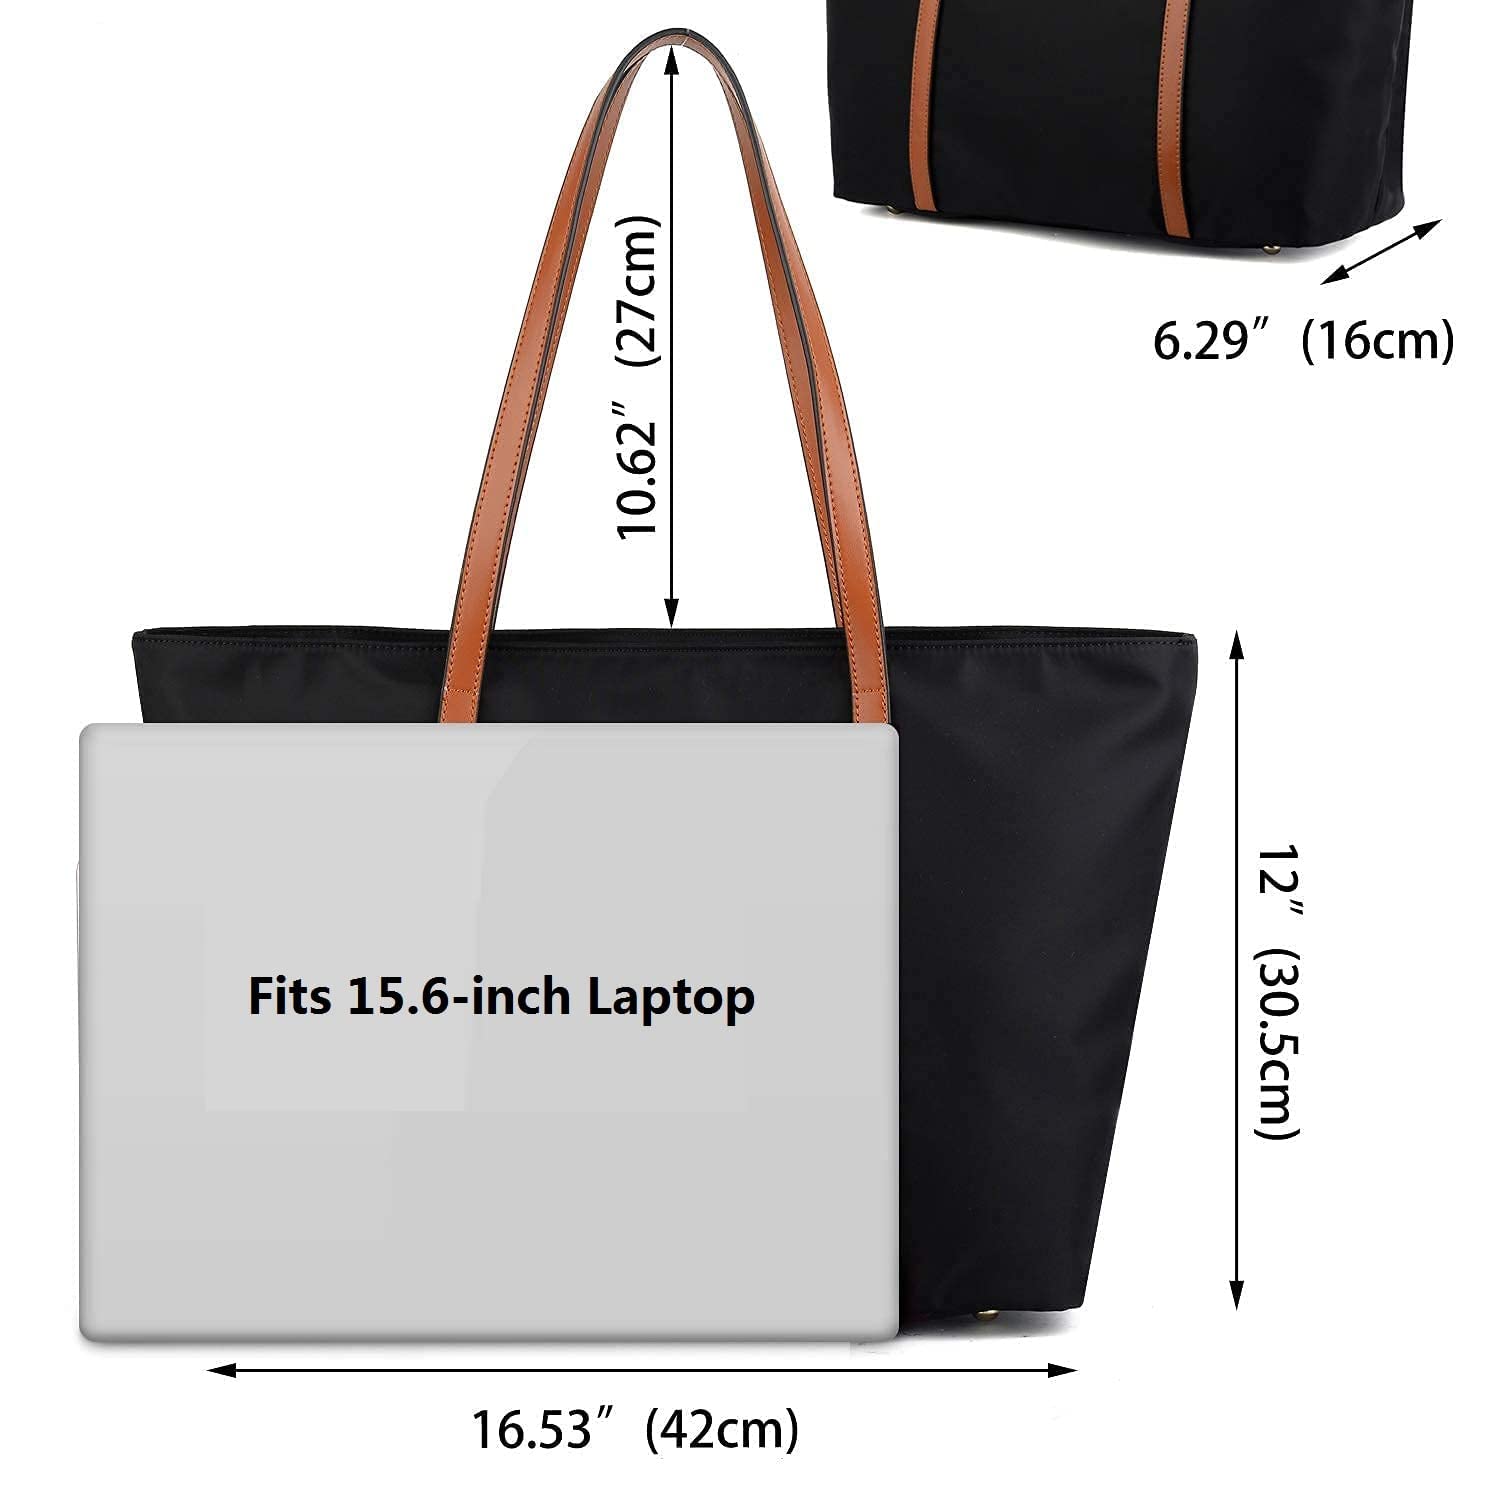 YALUXE Tote Bags for Women Leather Nylon Shoulder Bag Women's Large Capacity Work Handbag Purse Teacher Must Haves